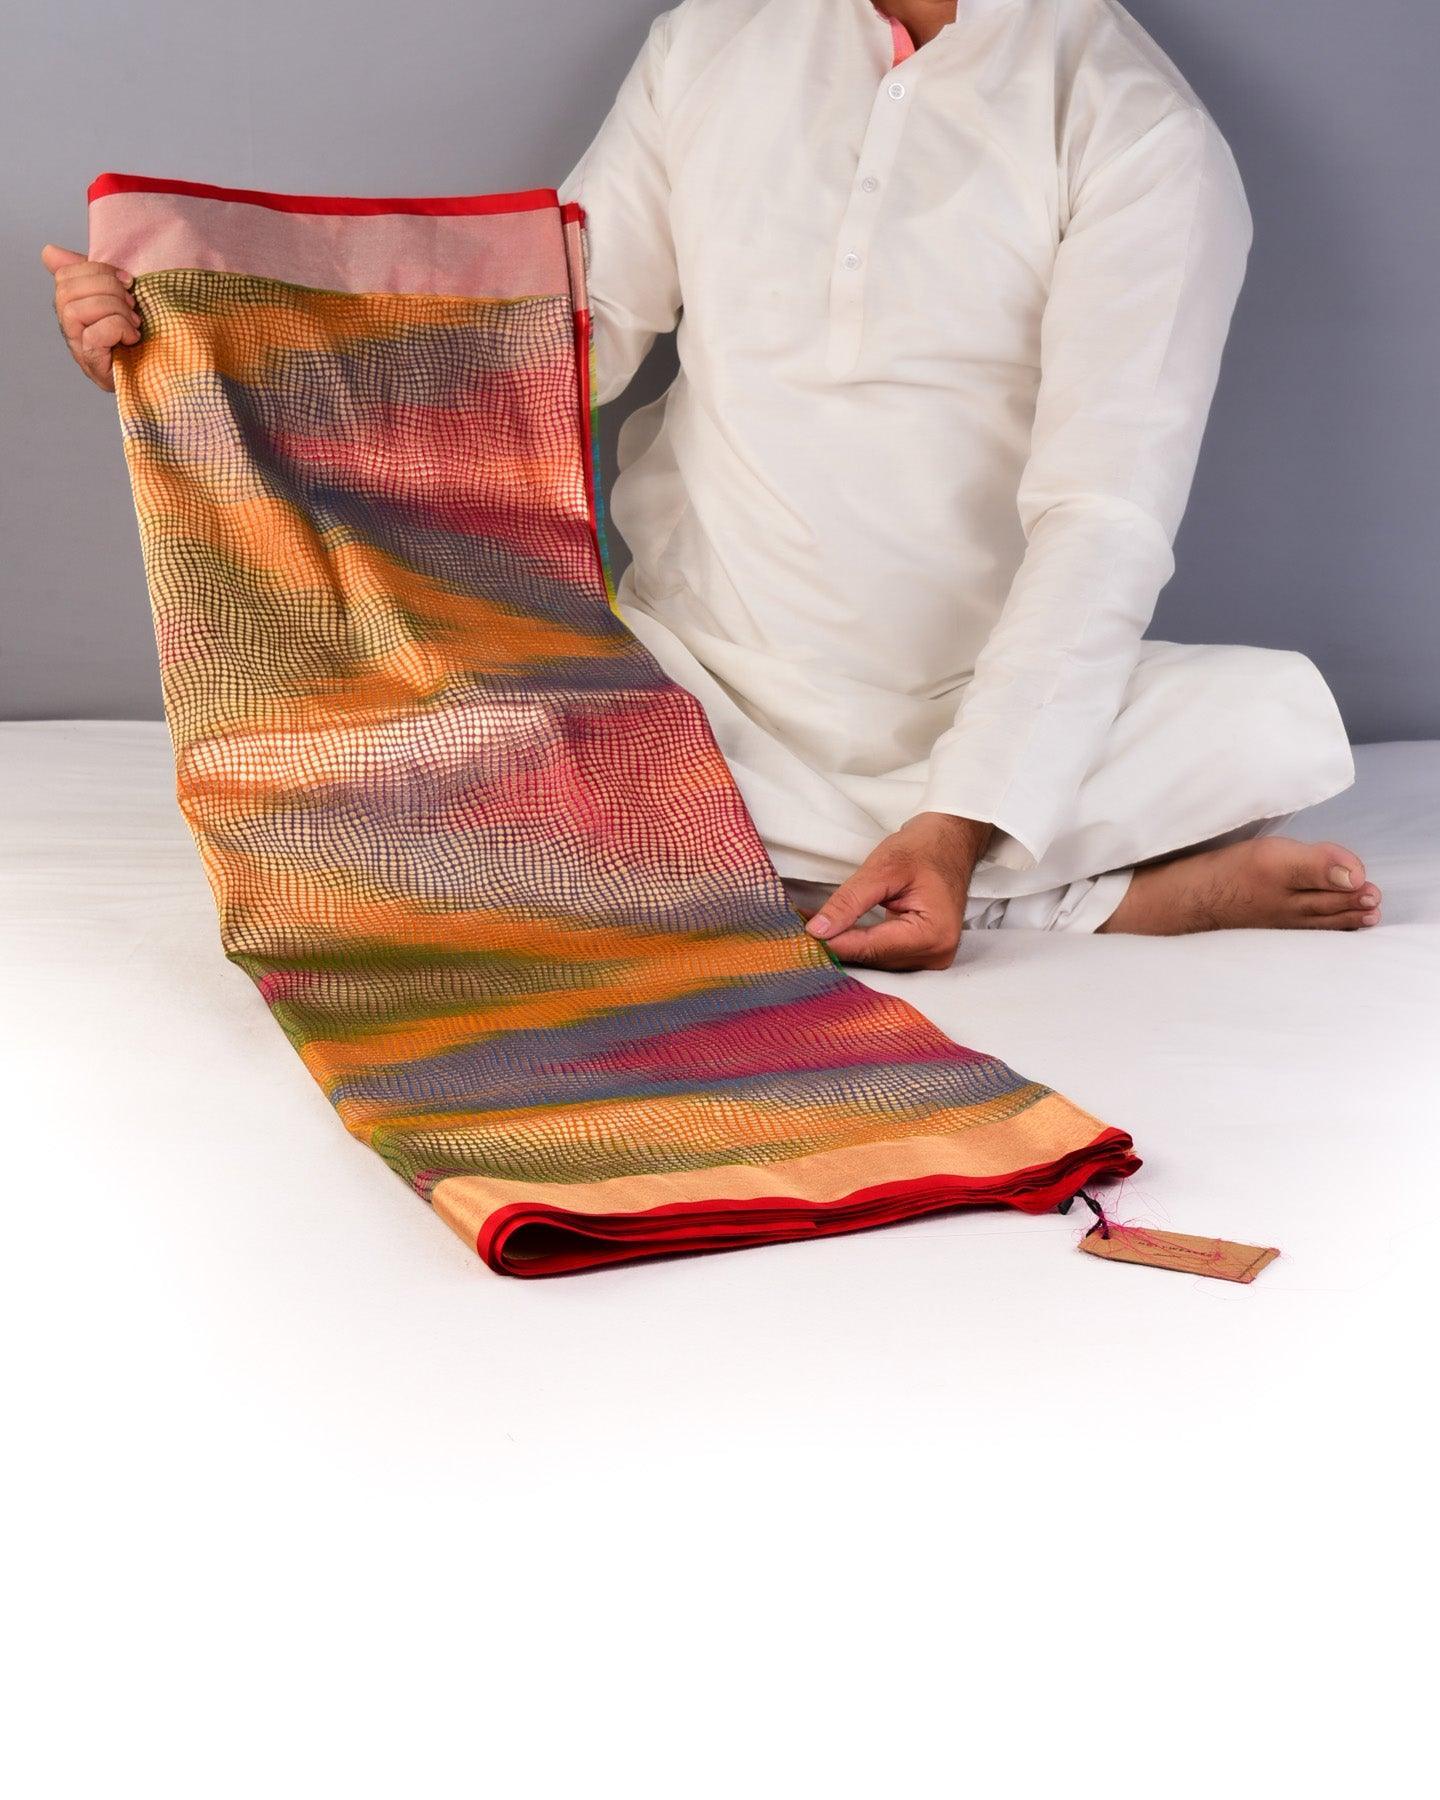 Vibgyor Red Banarasi Python Brocade Handwoven Katan Silk Saree - By HolyWeaves, Benares